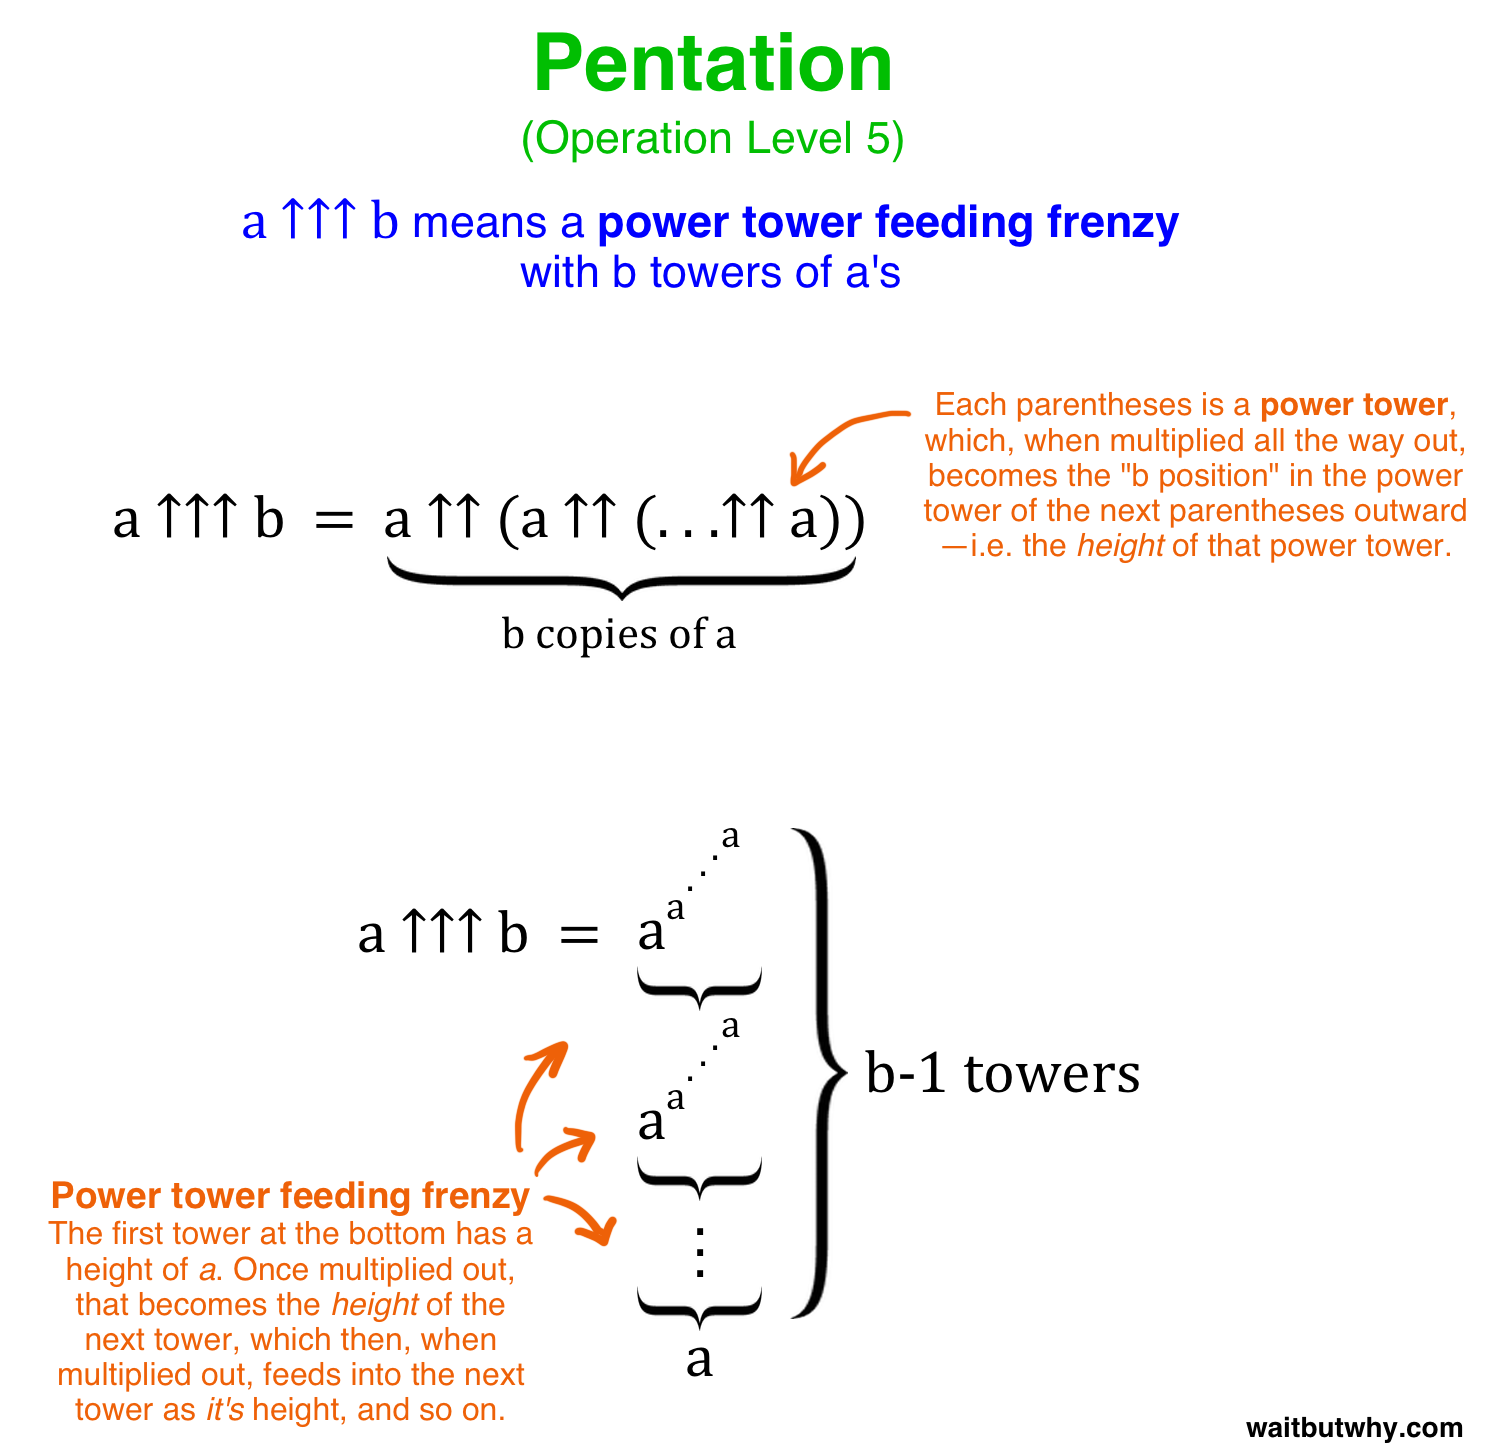 pentation generally